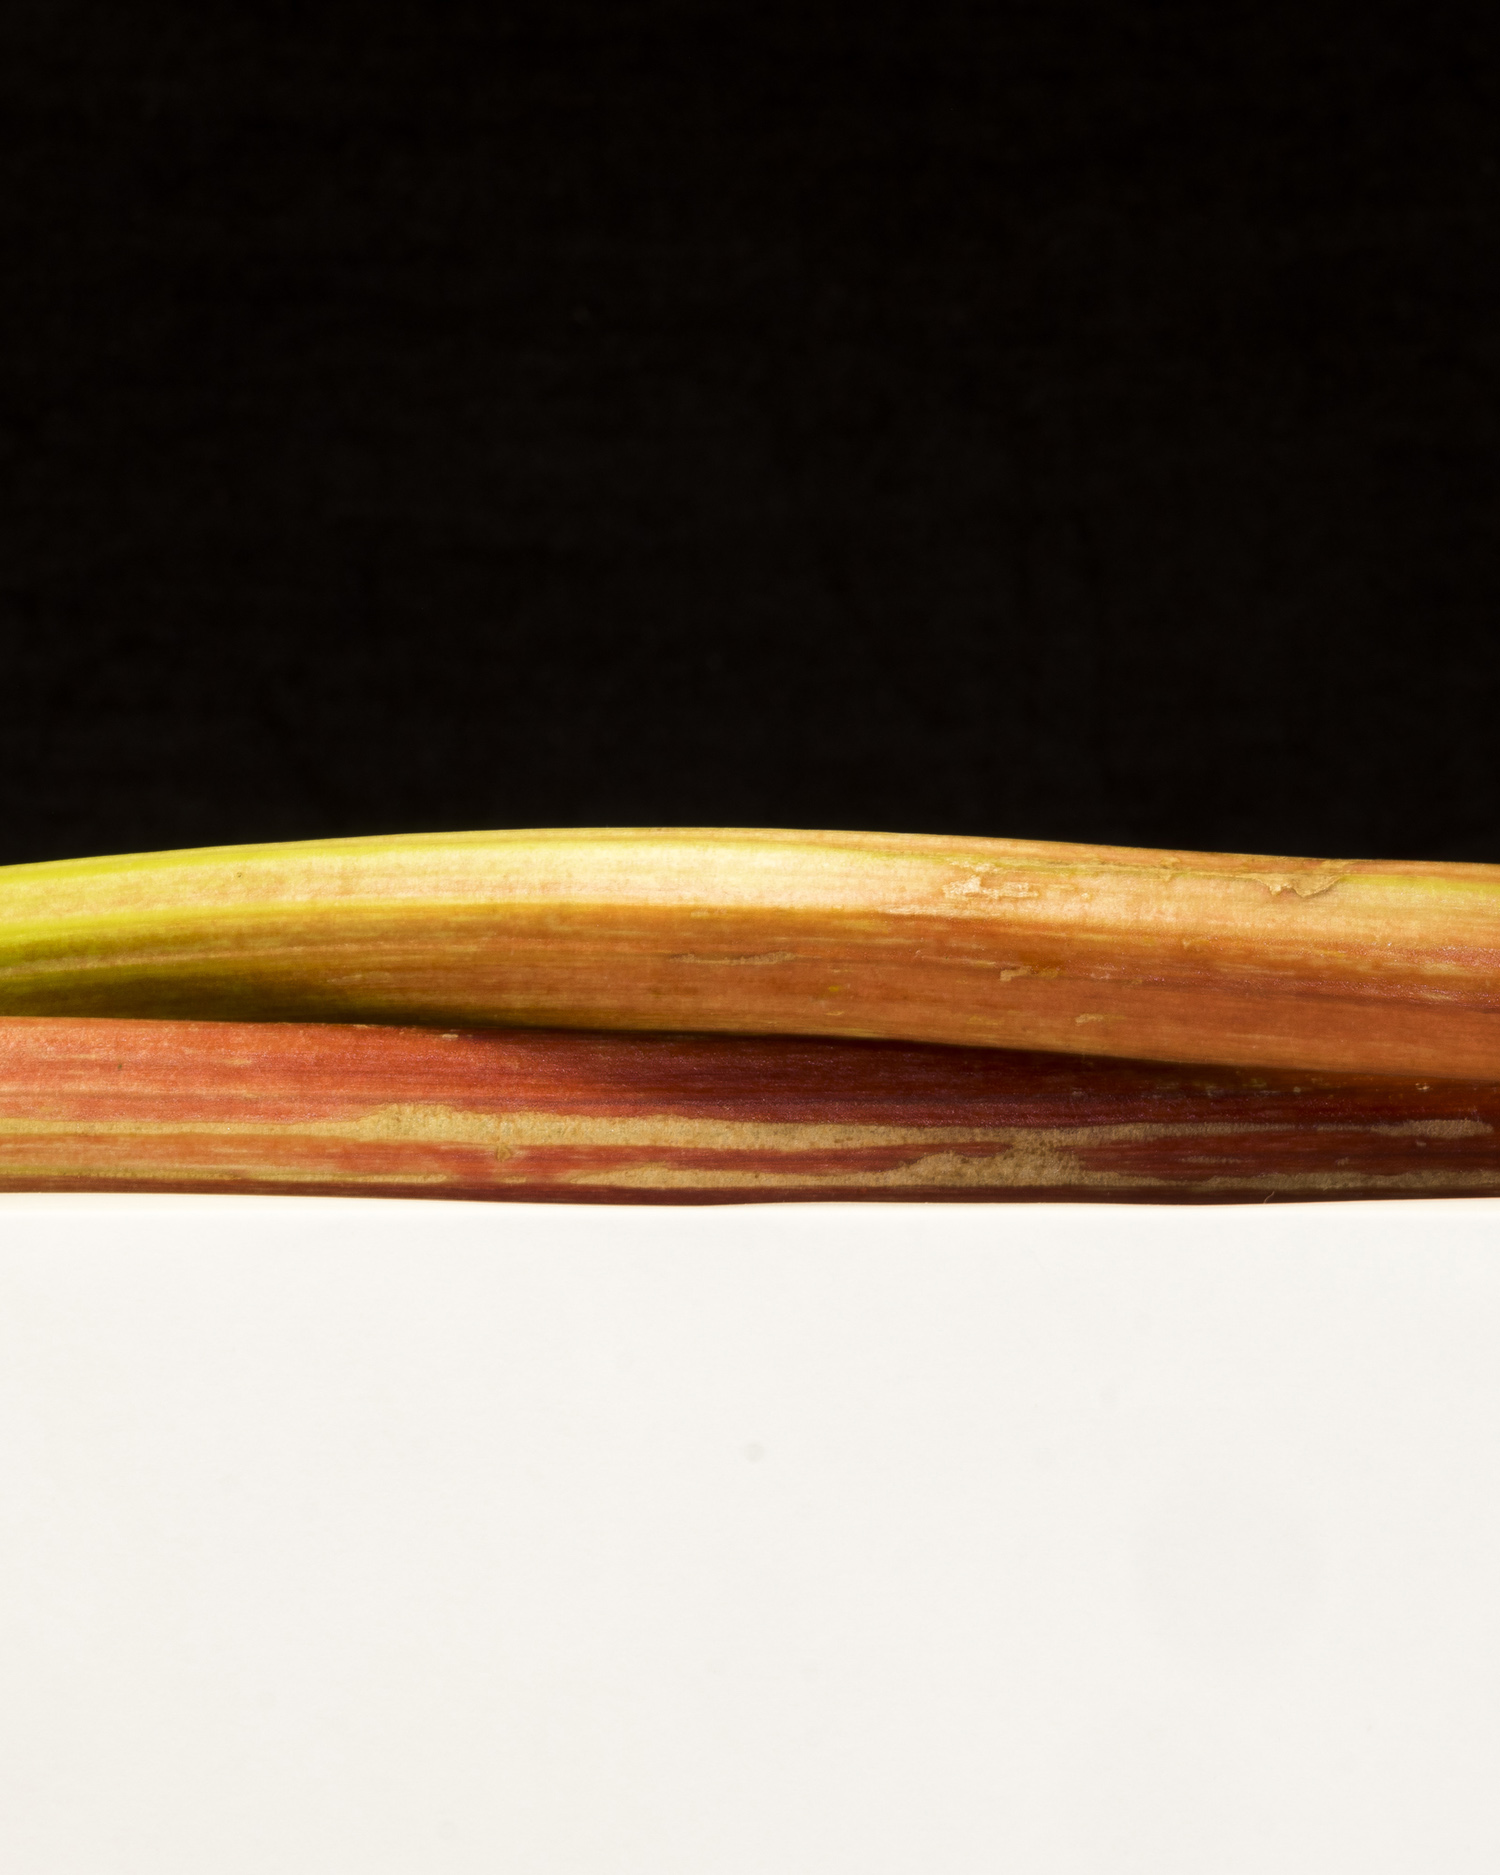 La rhubarbe d'Agathe © Sylvain Gouraud